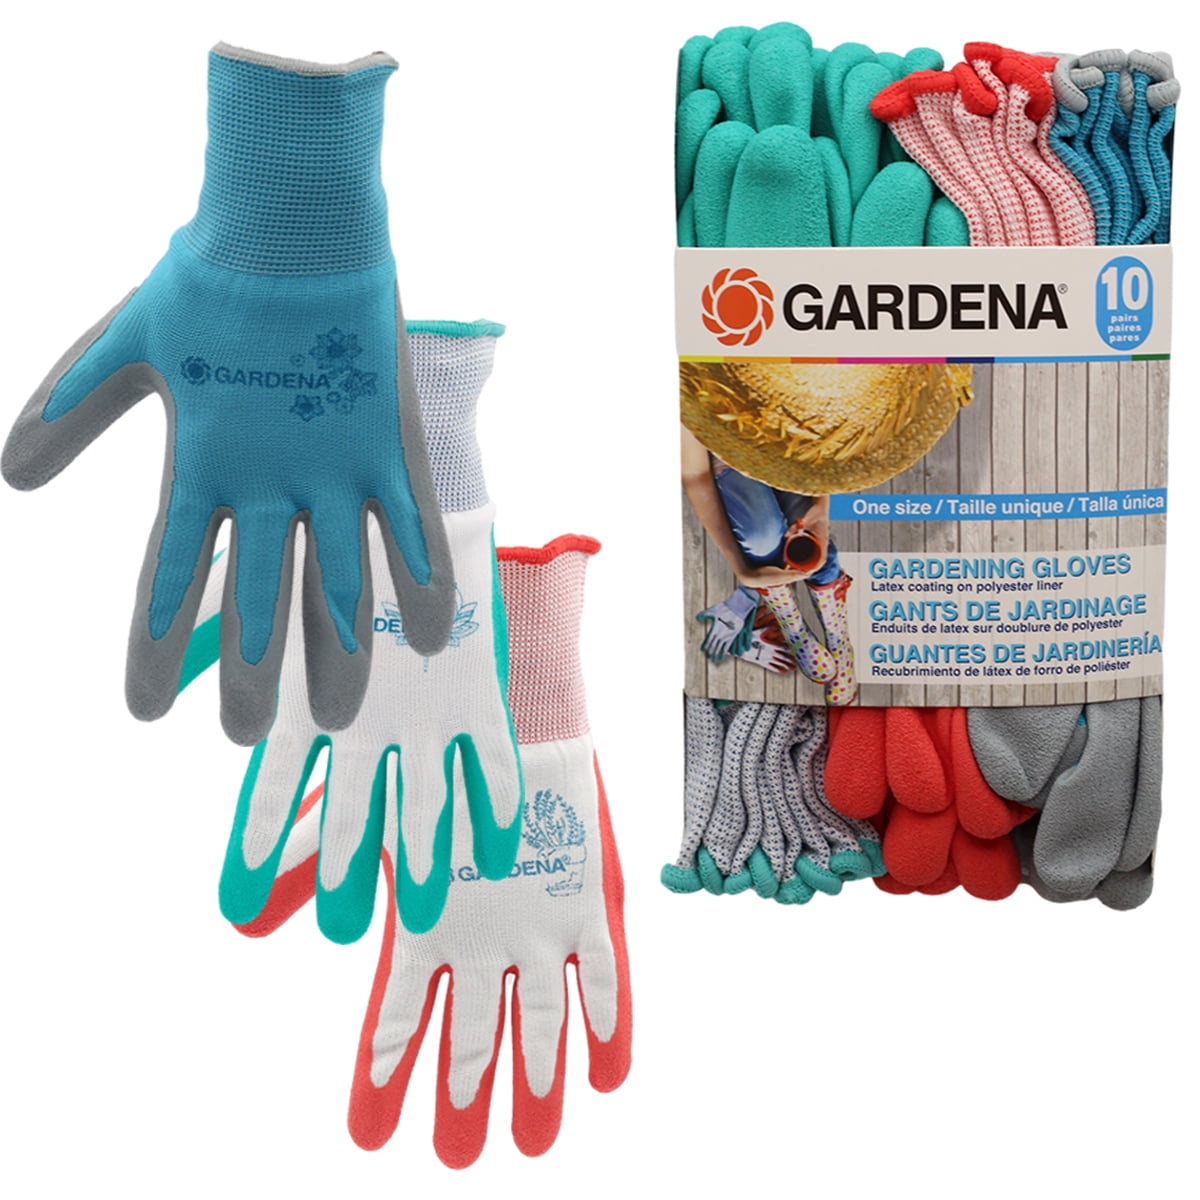 Gardena Gardening Gloves Latex Coating Polyester Liner Anti-Slip 5 or 10 Pairs 